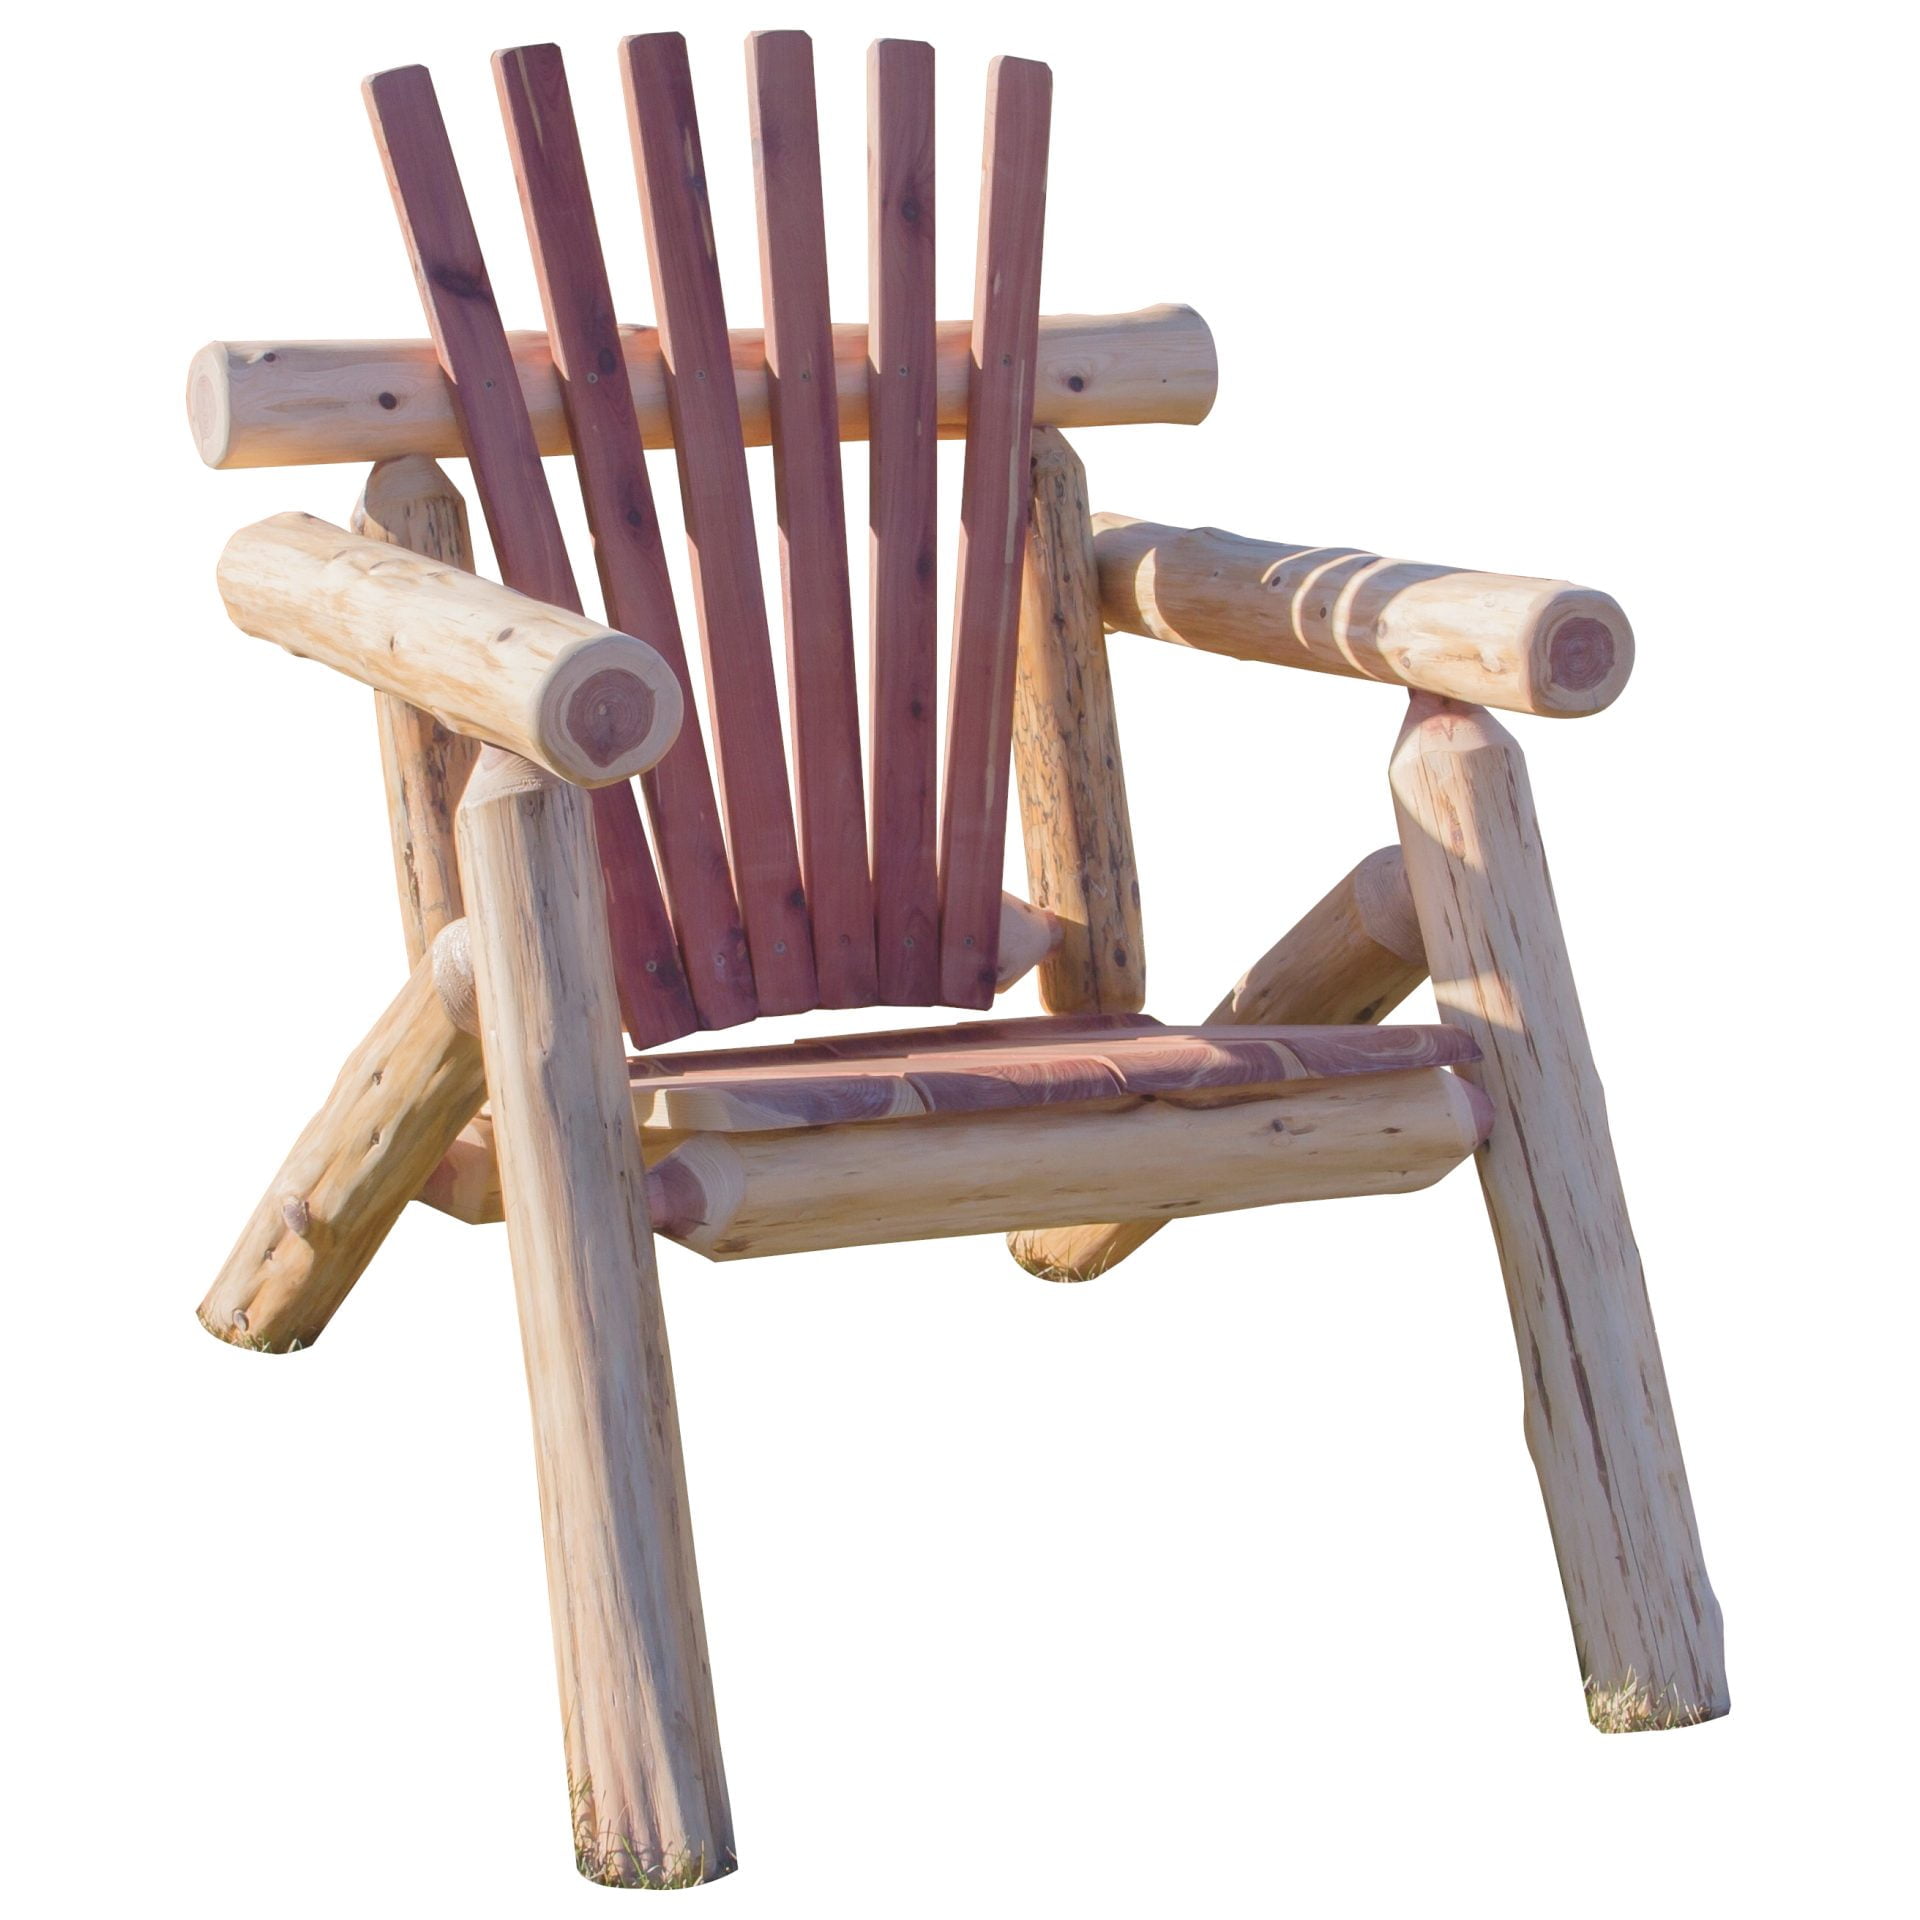 Outdoor Red Cedar Log Adirondack Chair